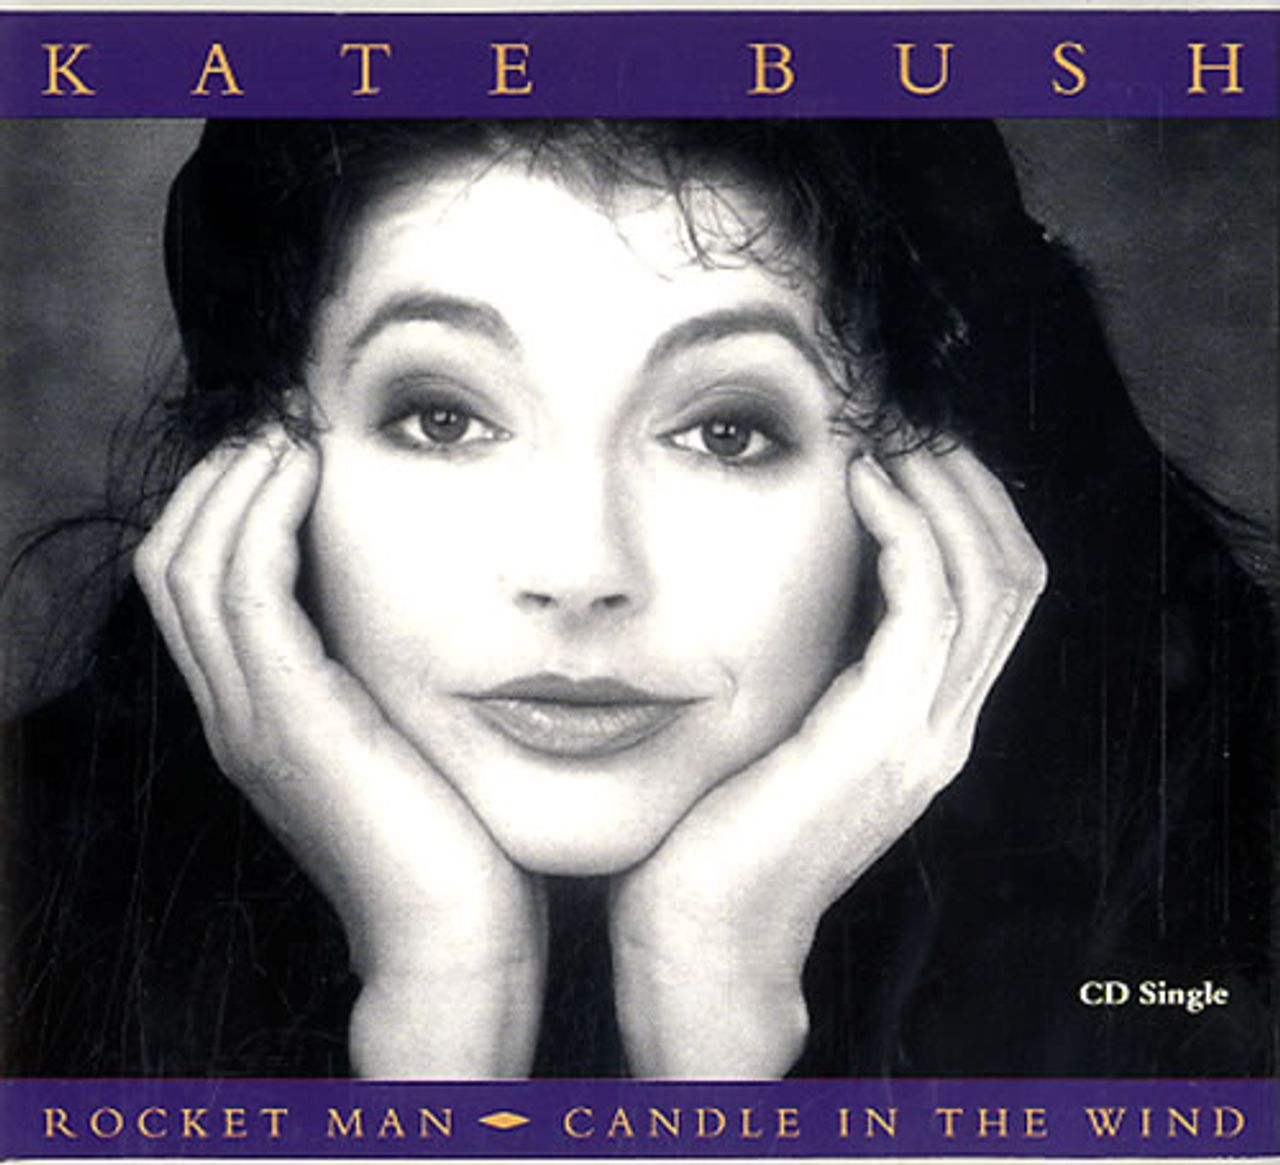 Kate Bush Rocket Man UK CD single — RareVinyl.com